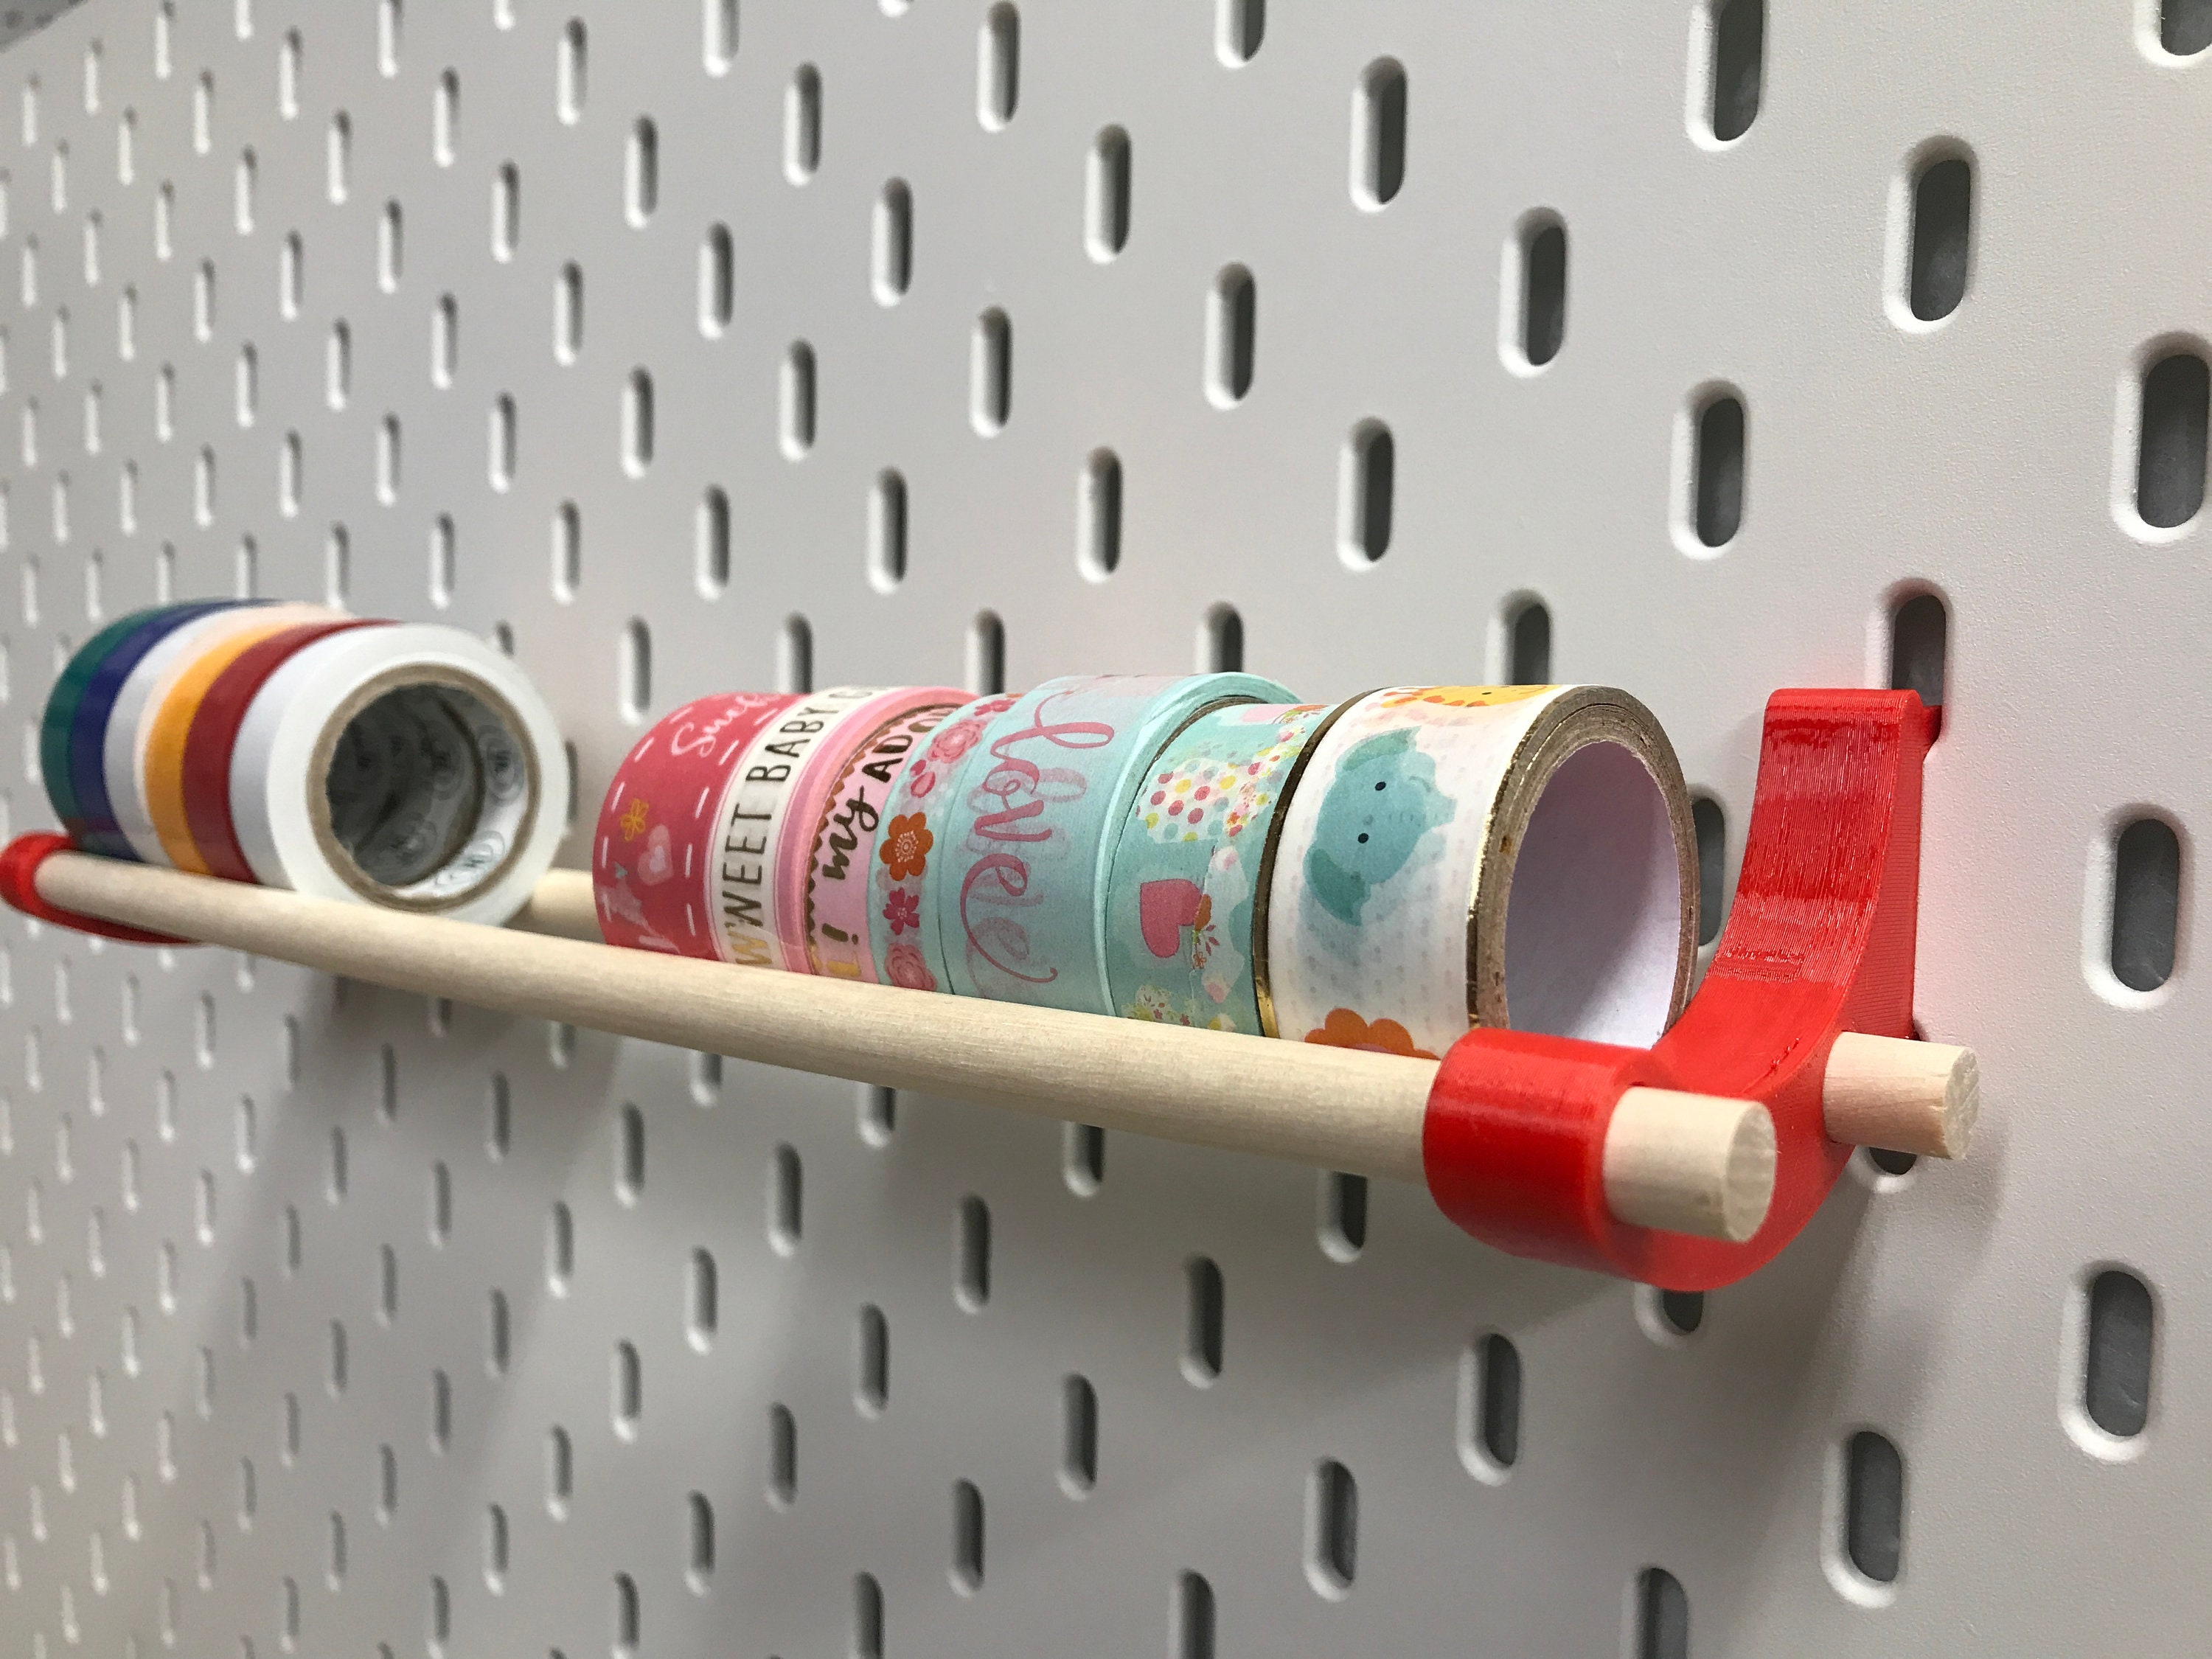 Washi Masking Tape Holder and Dispenser for Ikea Skadis Pegboard